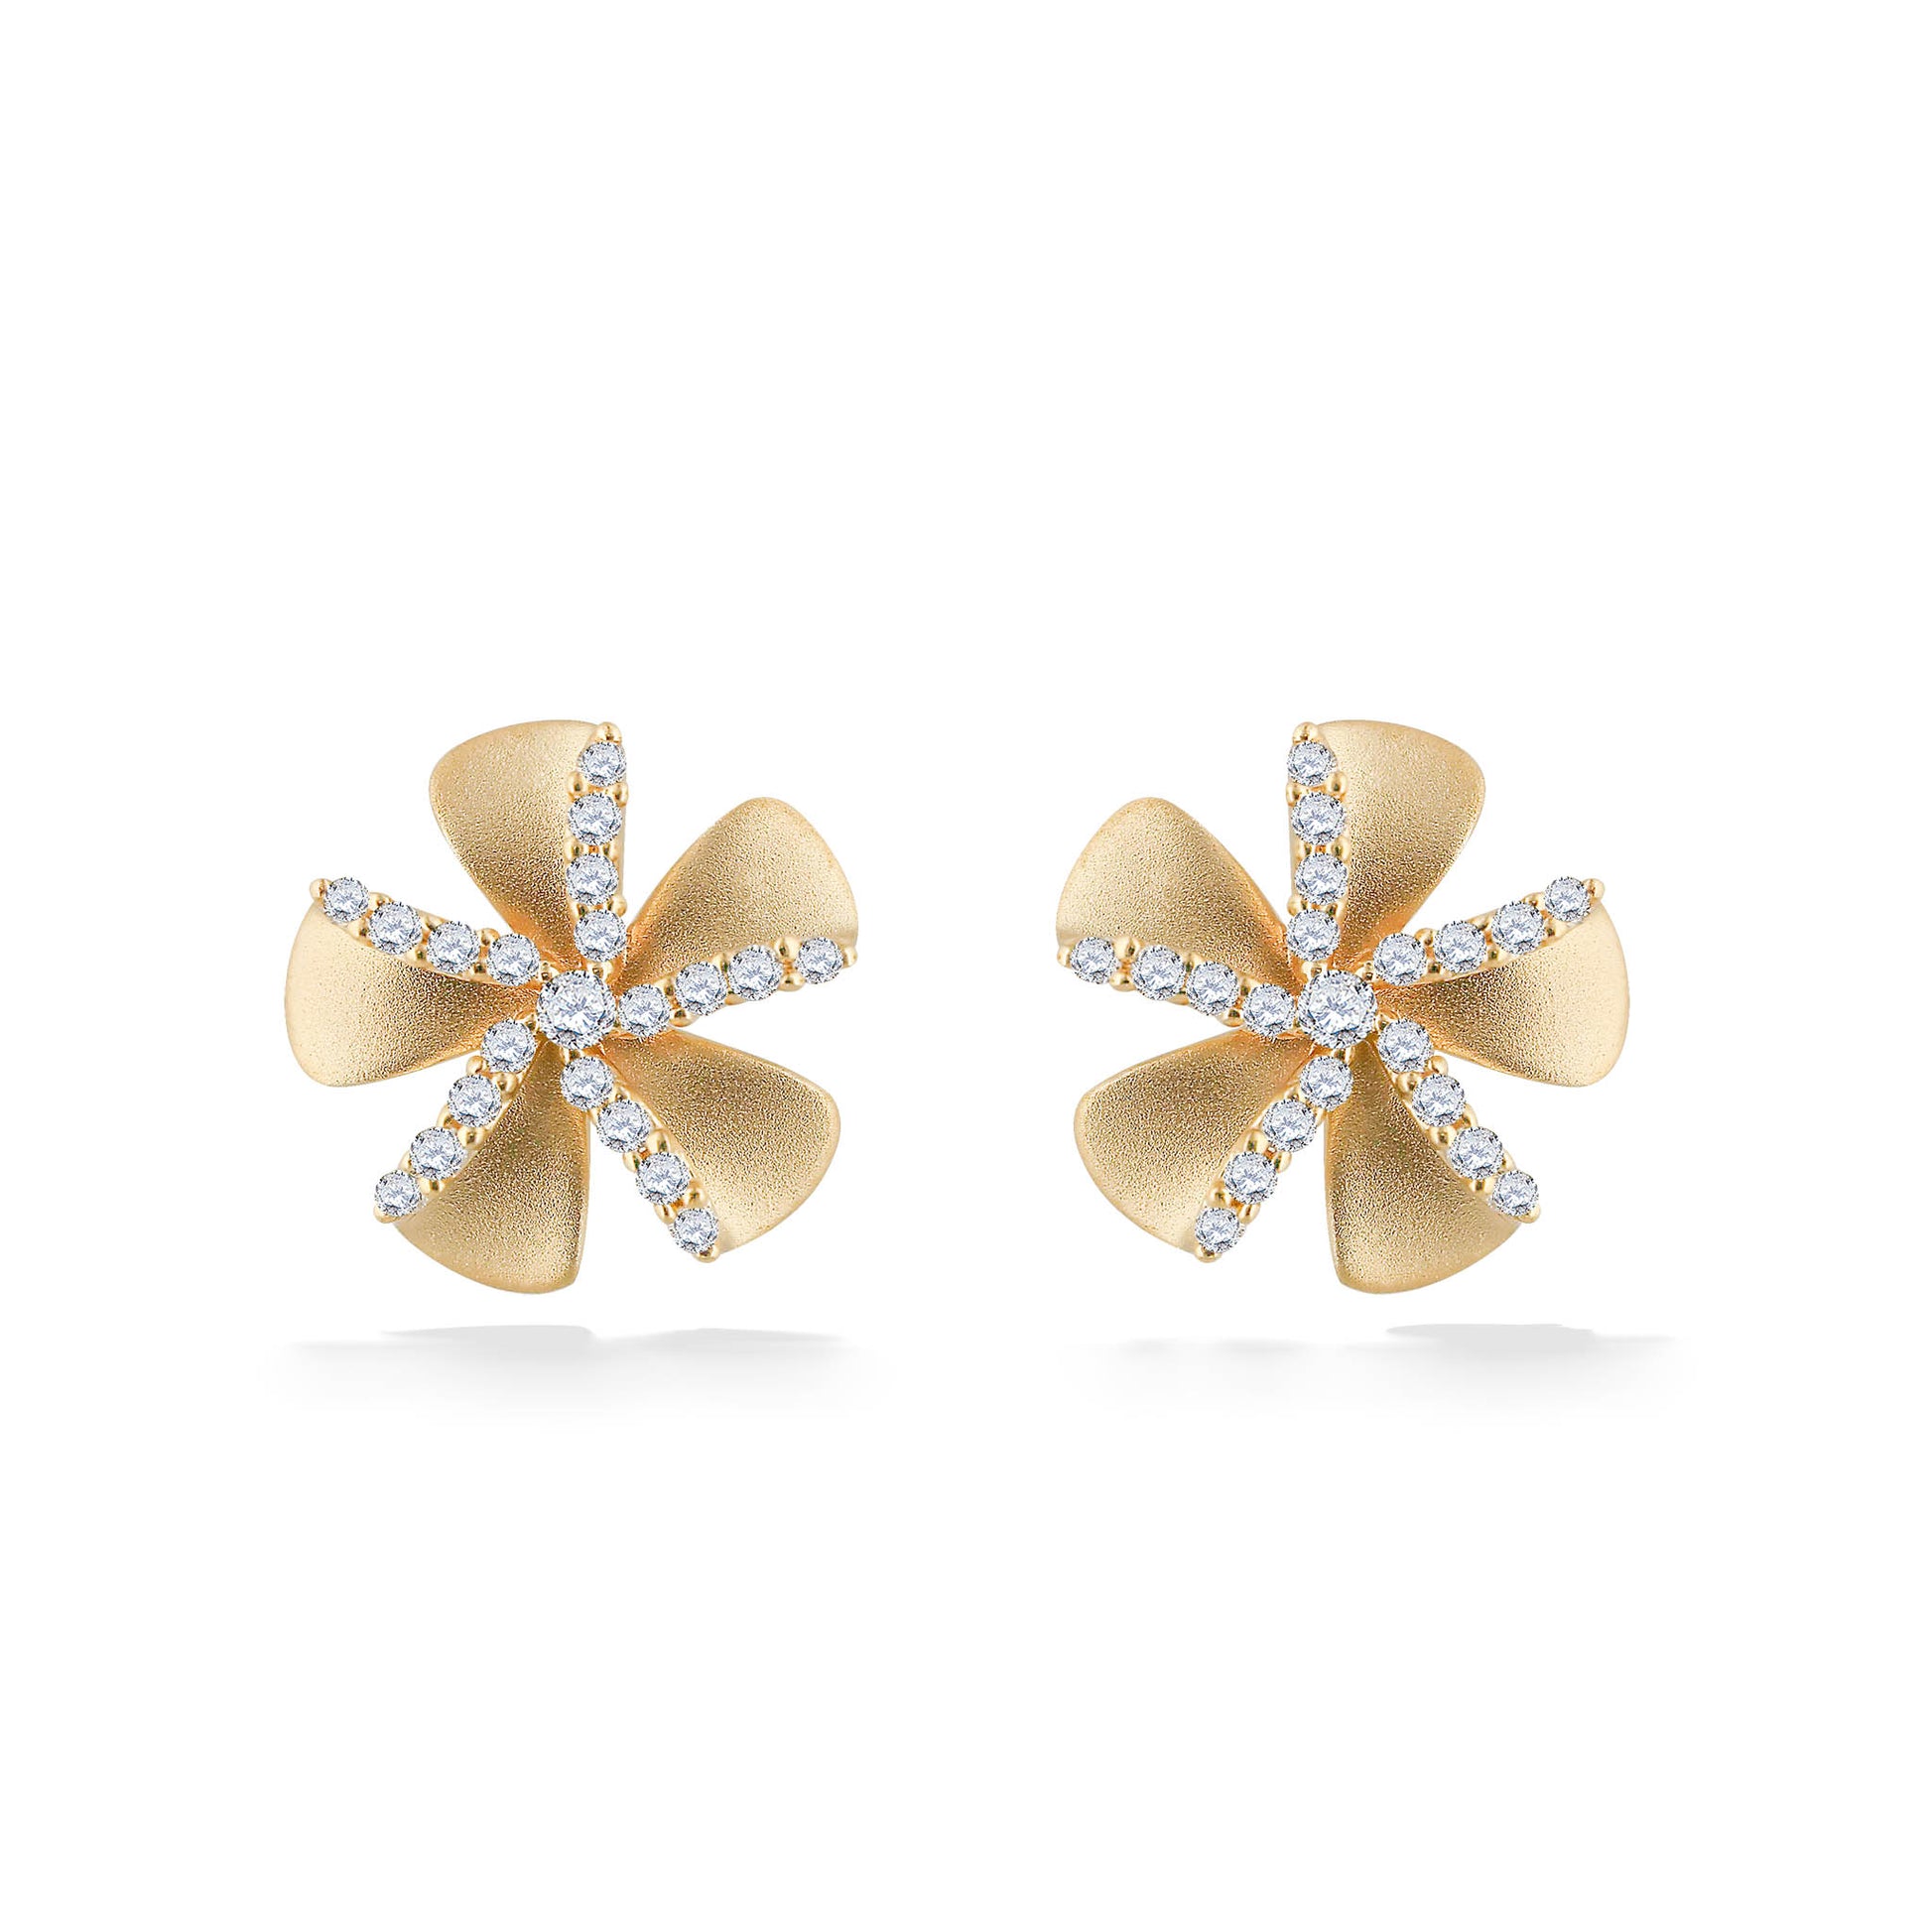 44685 - 14K Yellow Gold - Plumeria Stud Earrings